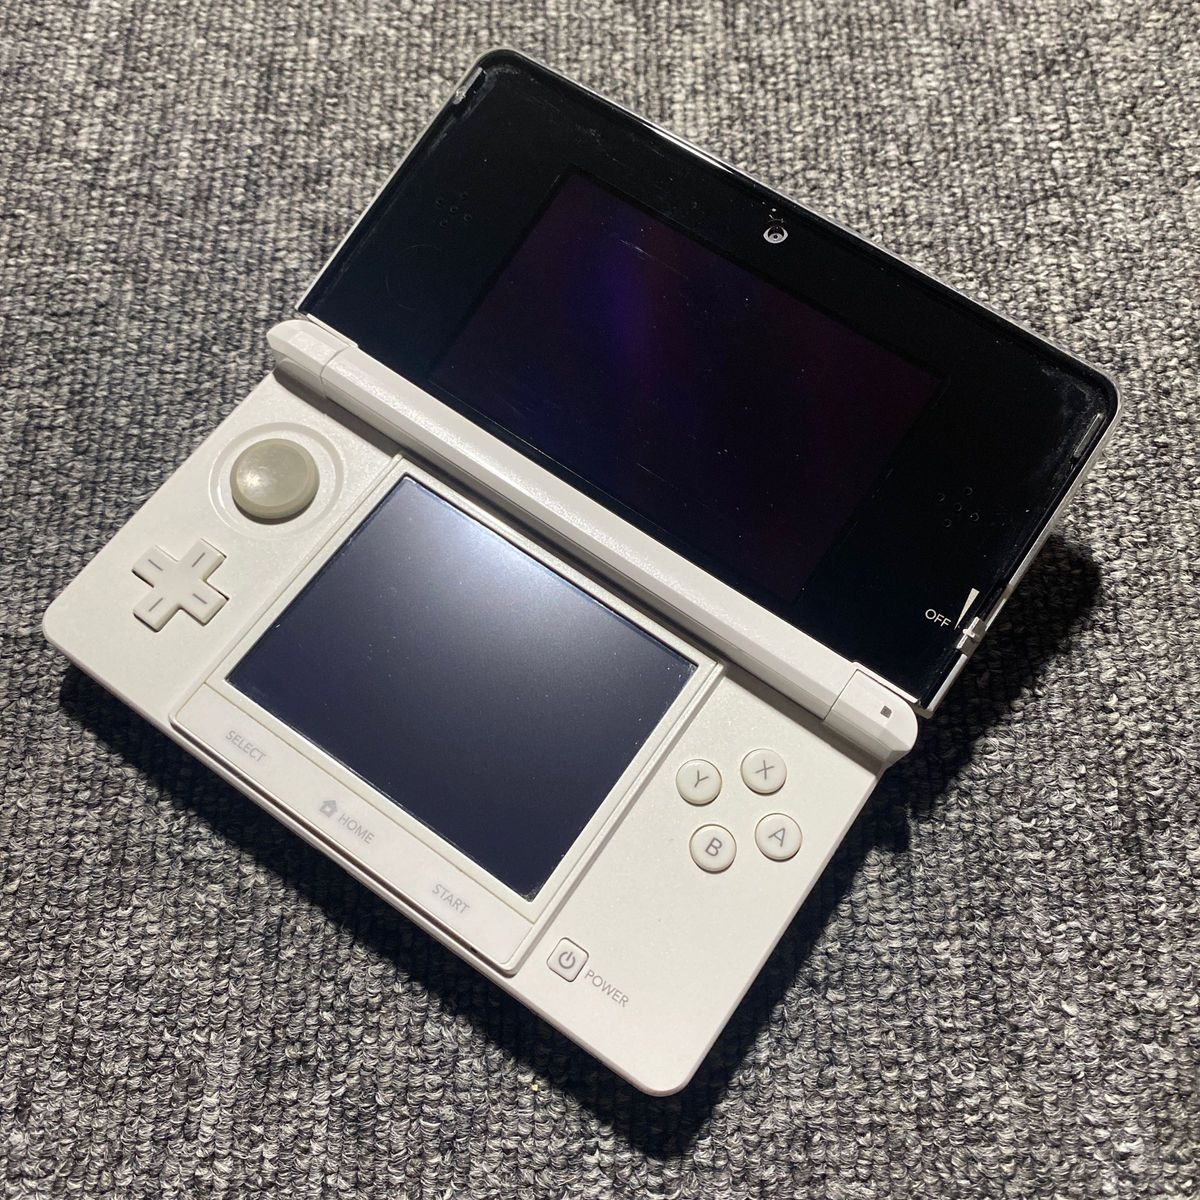 3DS ニンテンドー3DS アイスホワイト 充電器付き